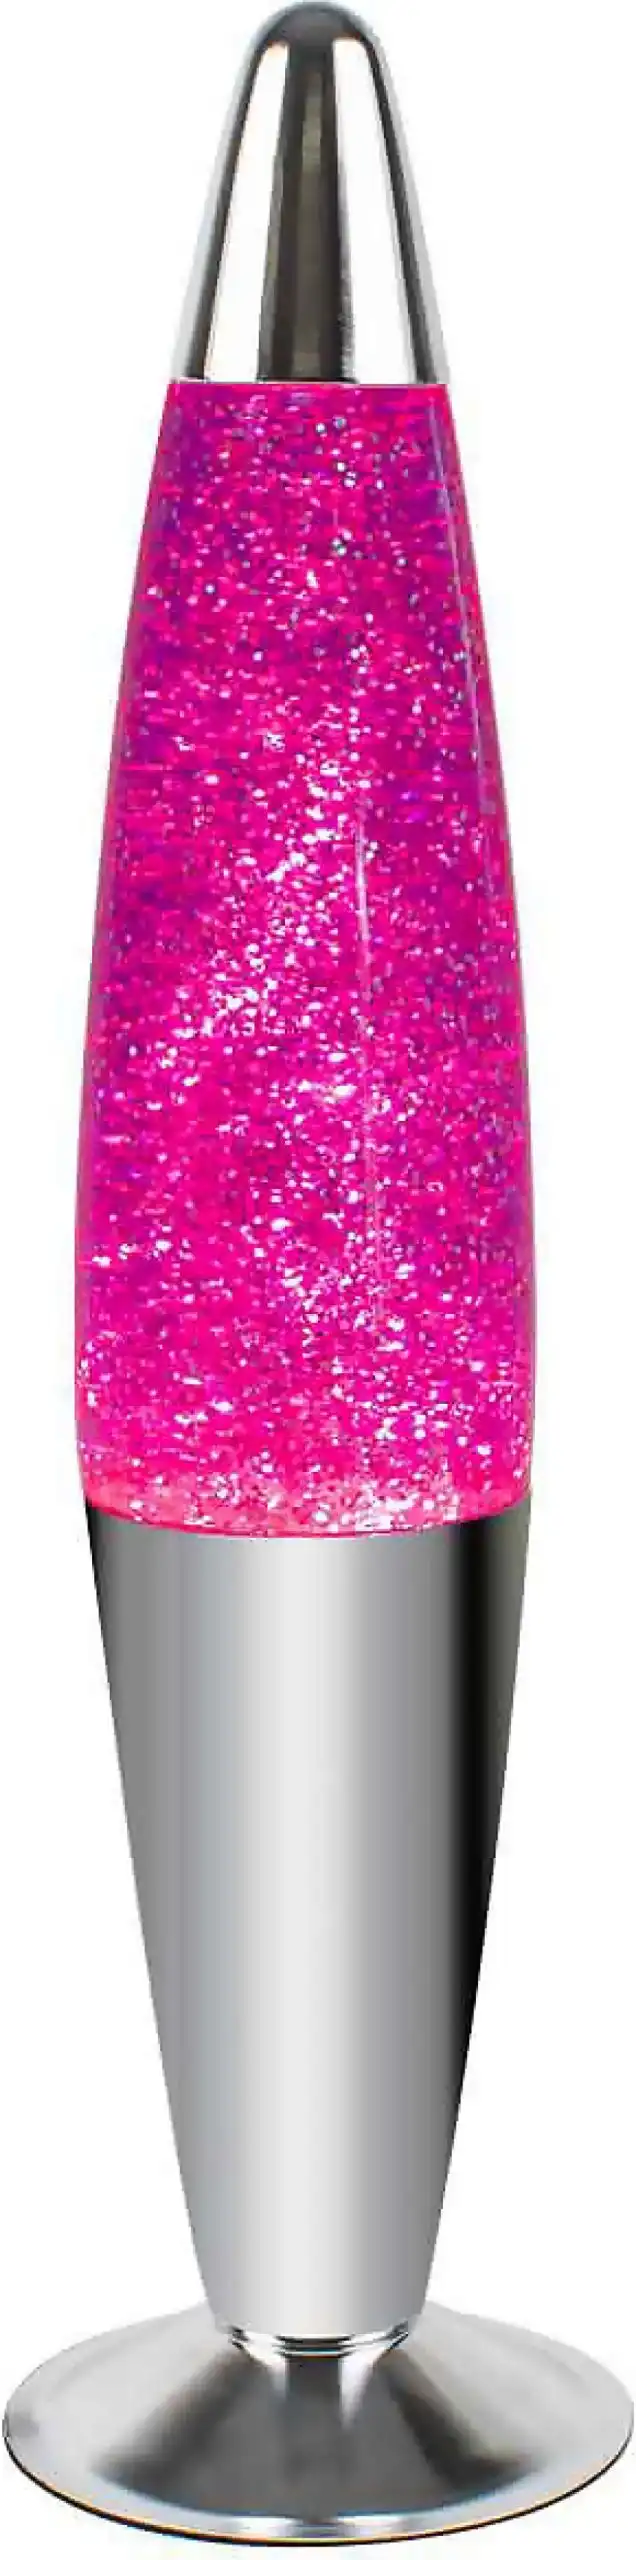 LANDMARK - Liquid Lava Lamp 42cm Pink Glitter Liquid Chrome Base